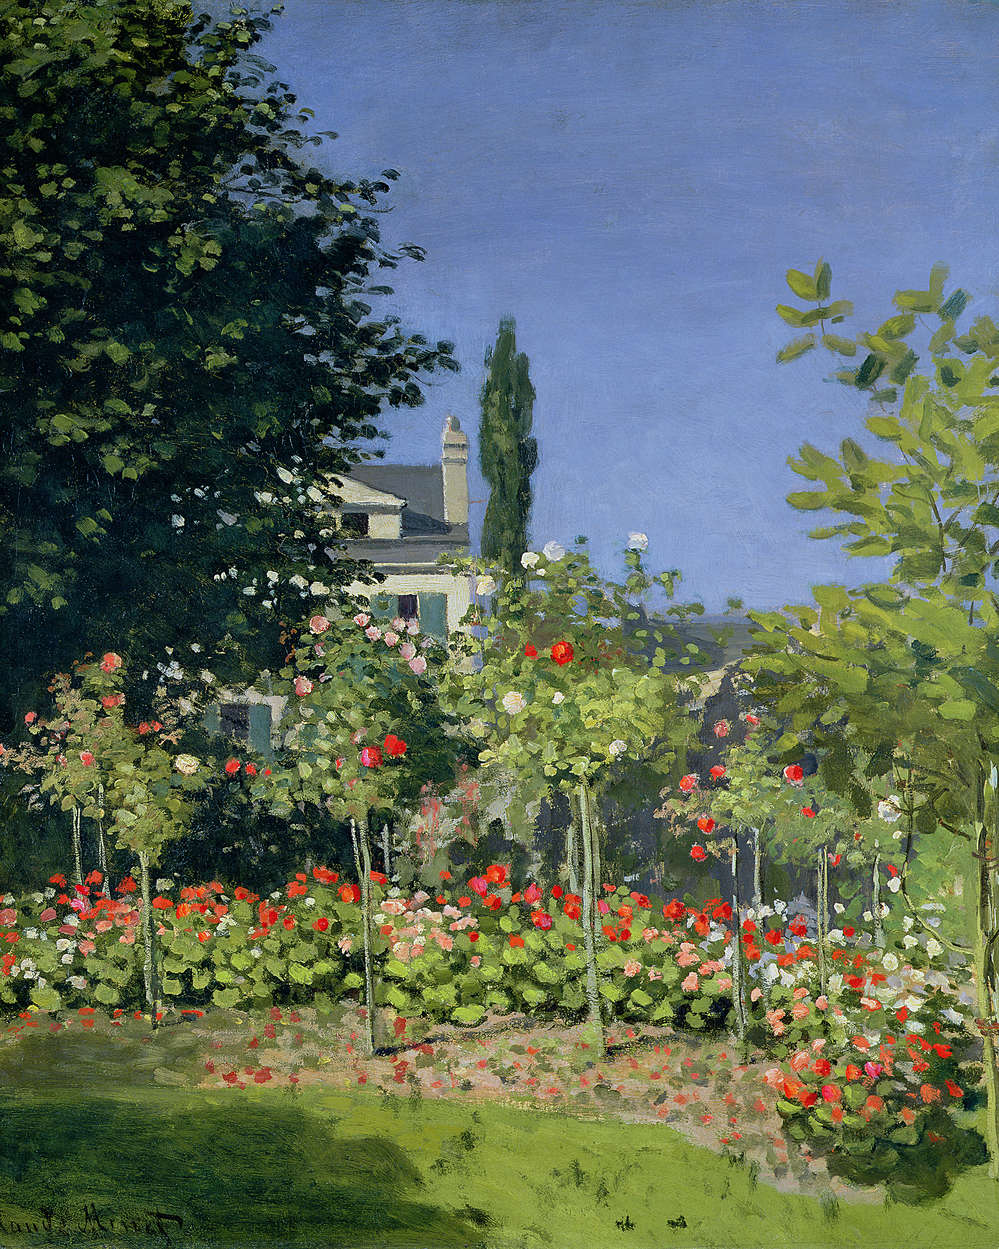             Photo wallpaper "Flowering garden in SainteAdresse" by Claude Monet
        